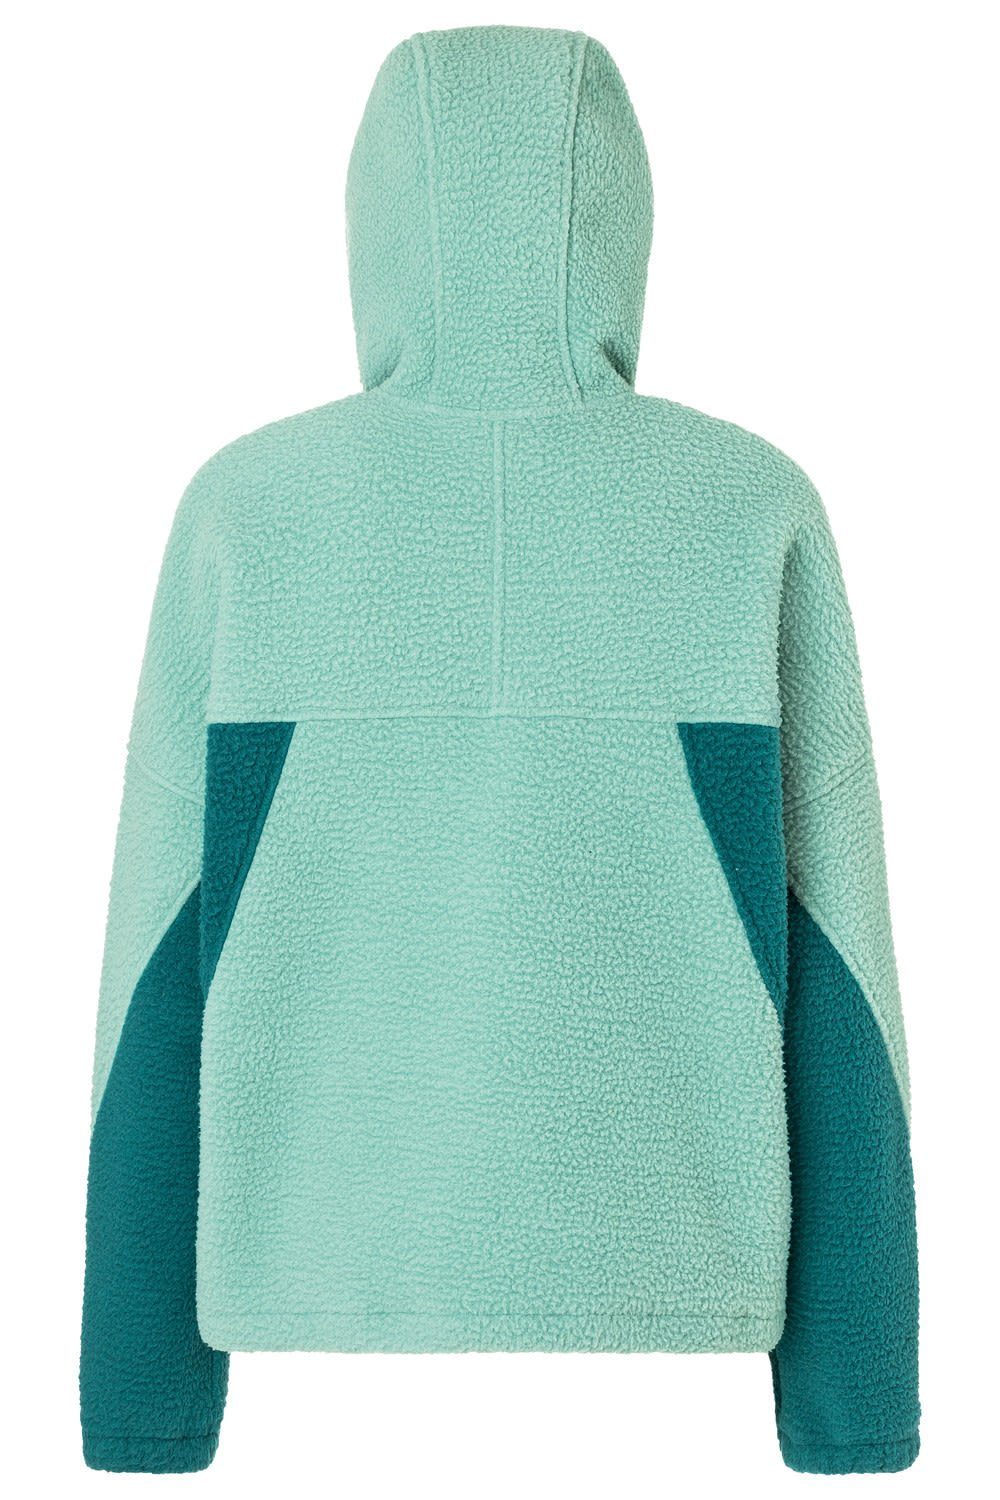 W Fleece Agave Hoodie Aros - Jungle Super Marmot Blue Fleecepullover Sweater Damen Marmot - Hazel Dark